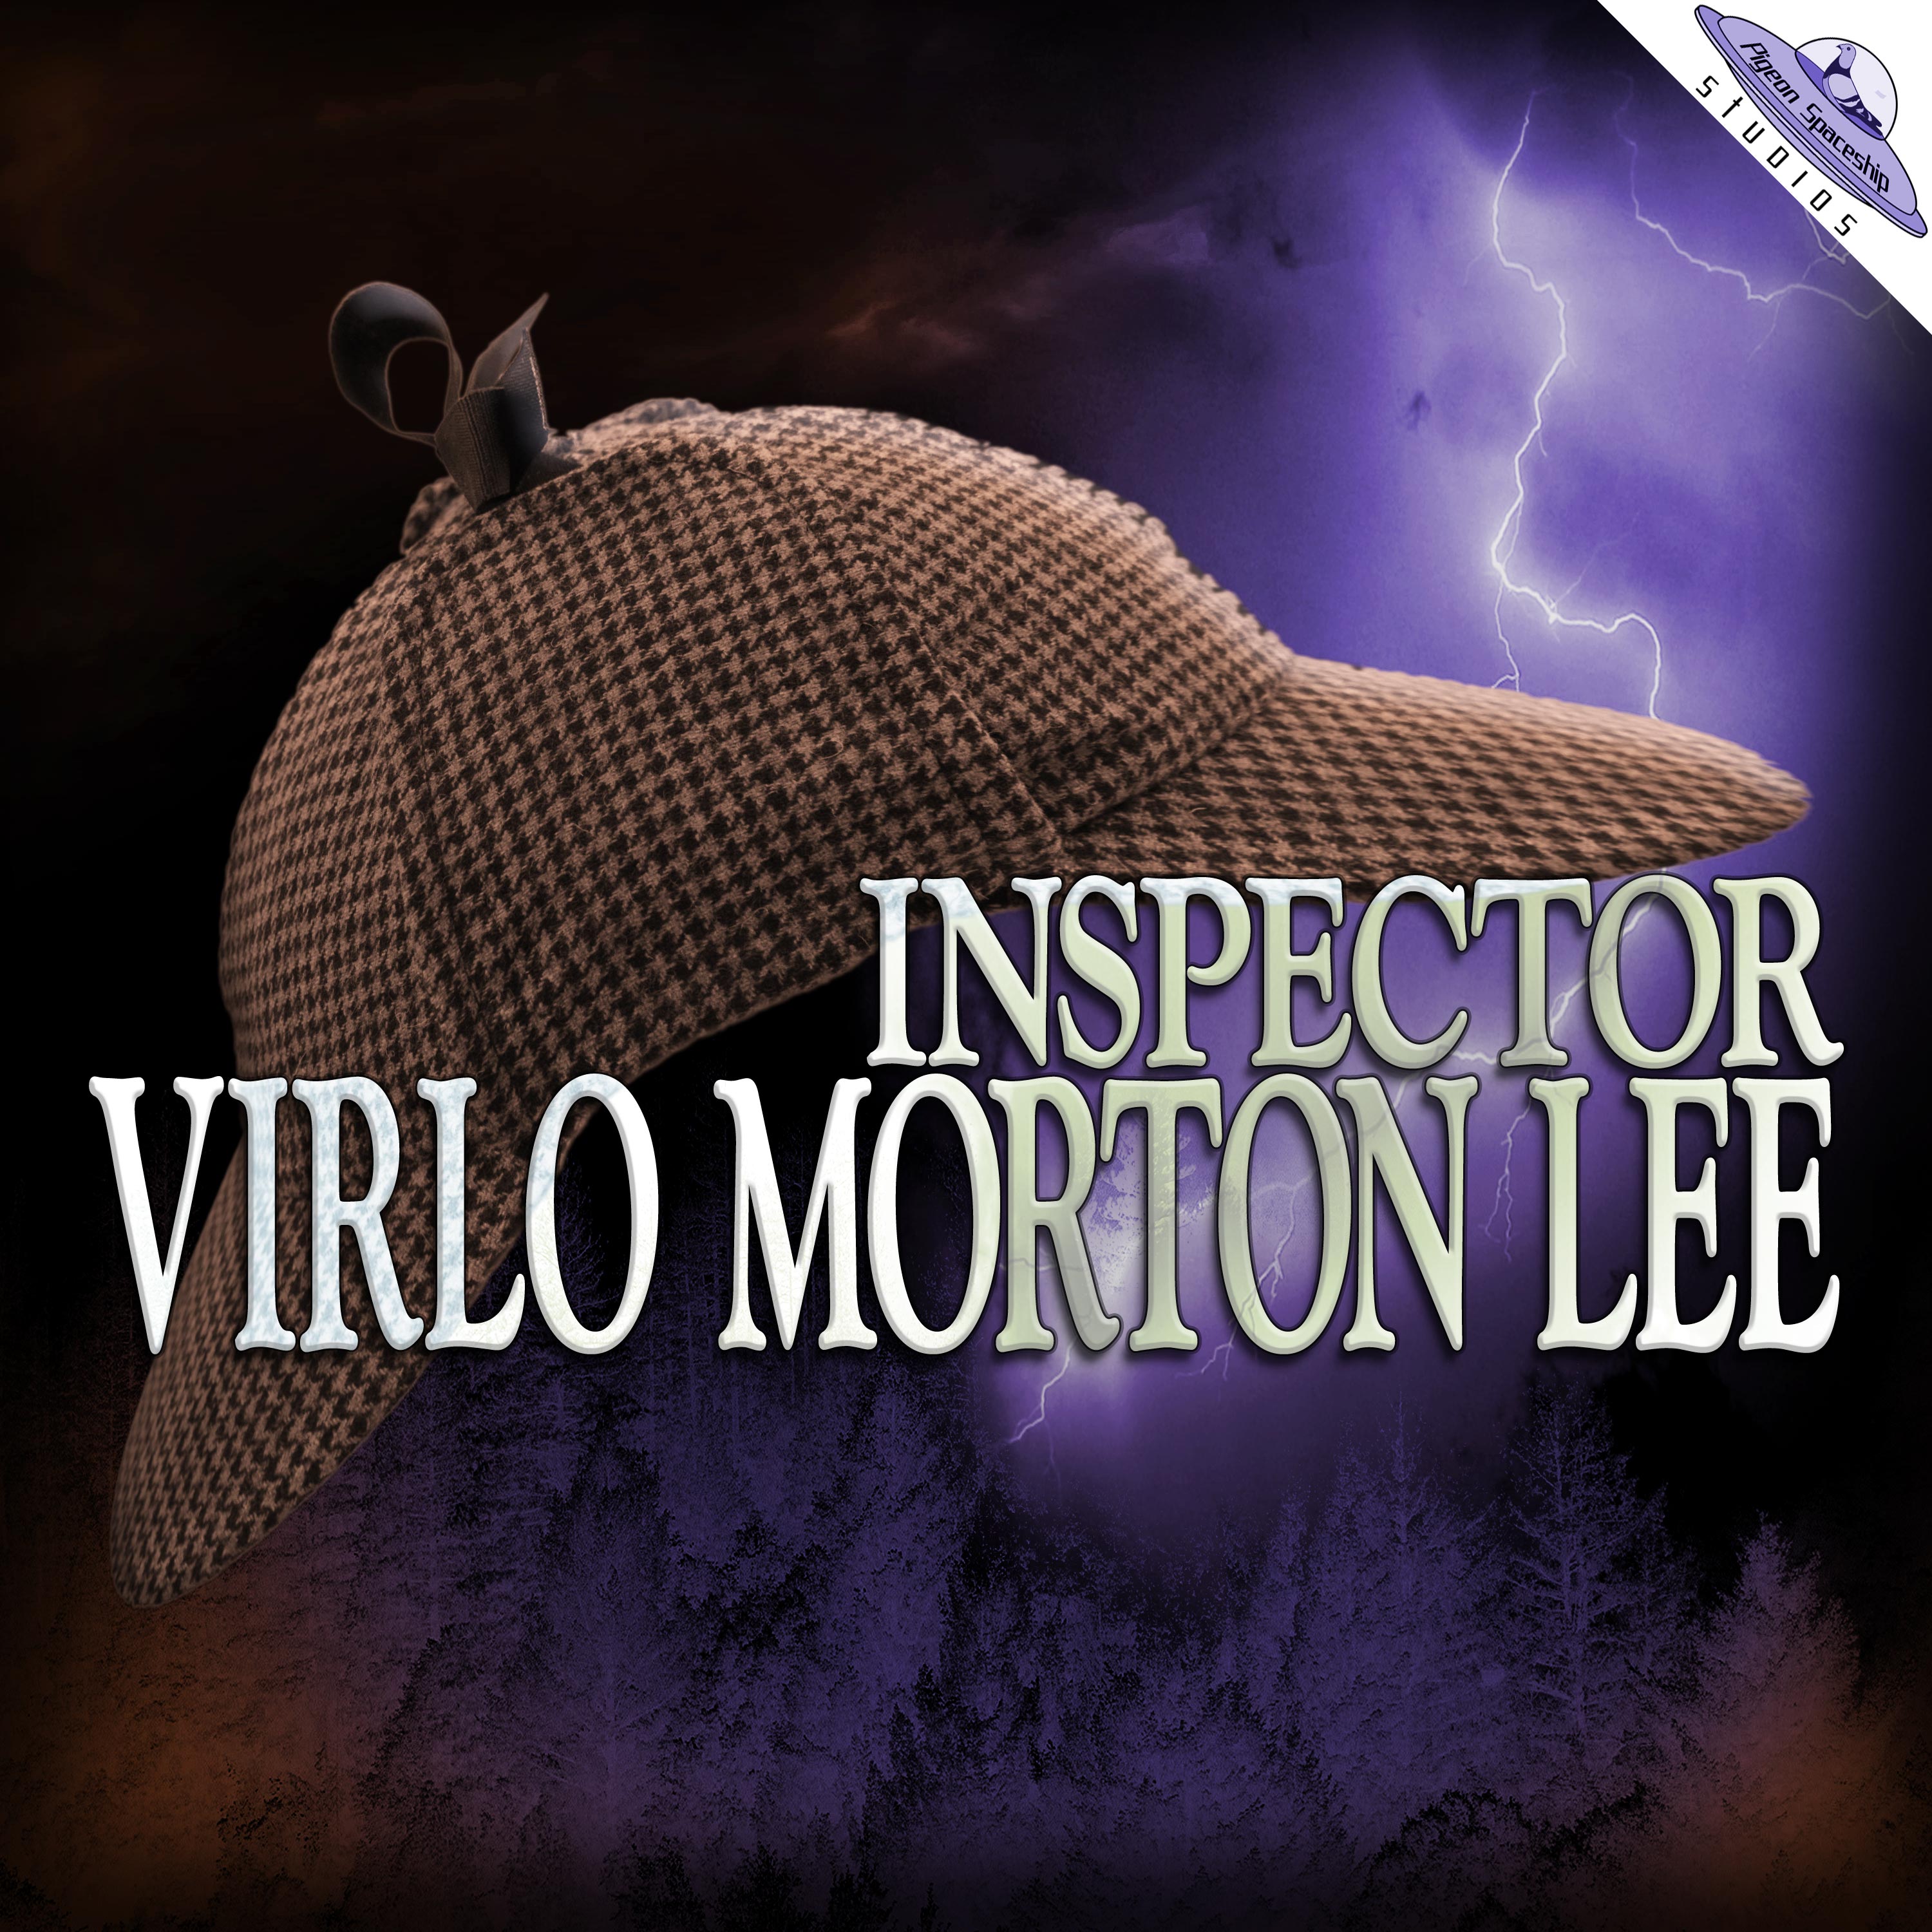 Inspector Virlo Morton Lee